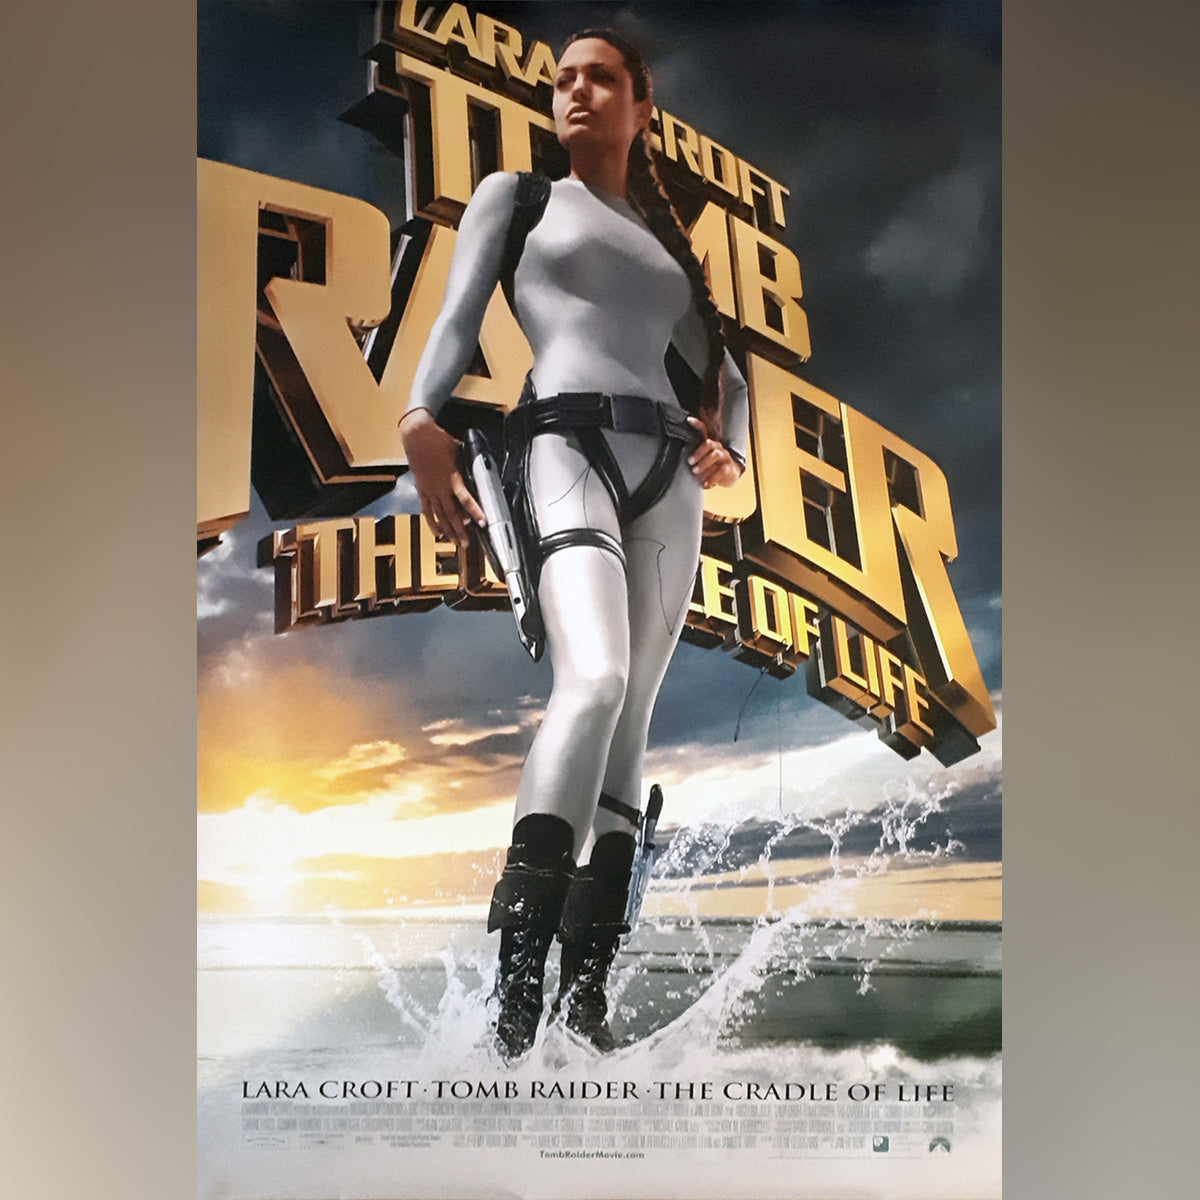 Original Movie Poster of Lara Croft: Tomb Raider (2001) - Signed By Angelina Jolie